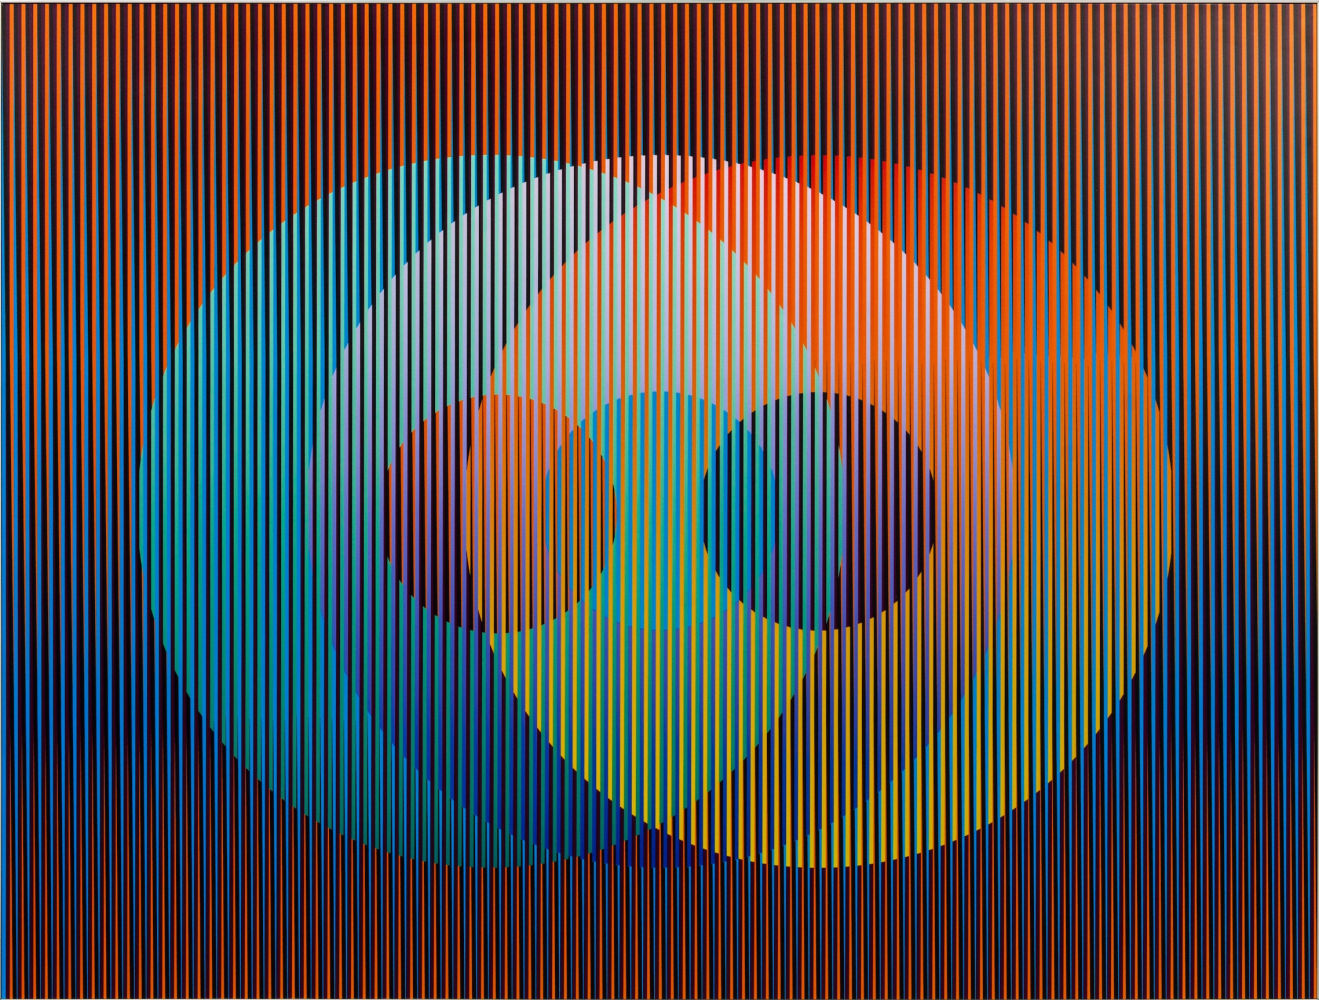 Color Aditivo Panam C&amp;iacute;rculos 7, 2010
Cromografía sobre aluminio
60&amp;nbsp;x 80&amp;nbsp;cm
23 79/127&amp;nbsp;x 31 63/127&amp;nbsp;in
Edici&amp;oacute;n de 8